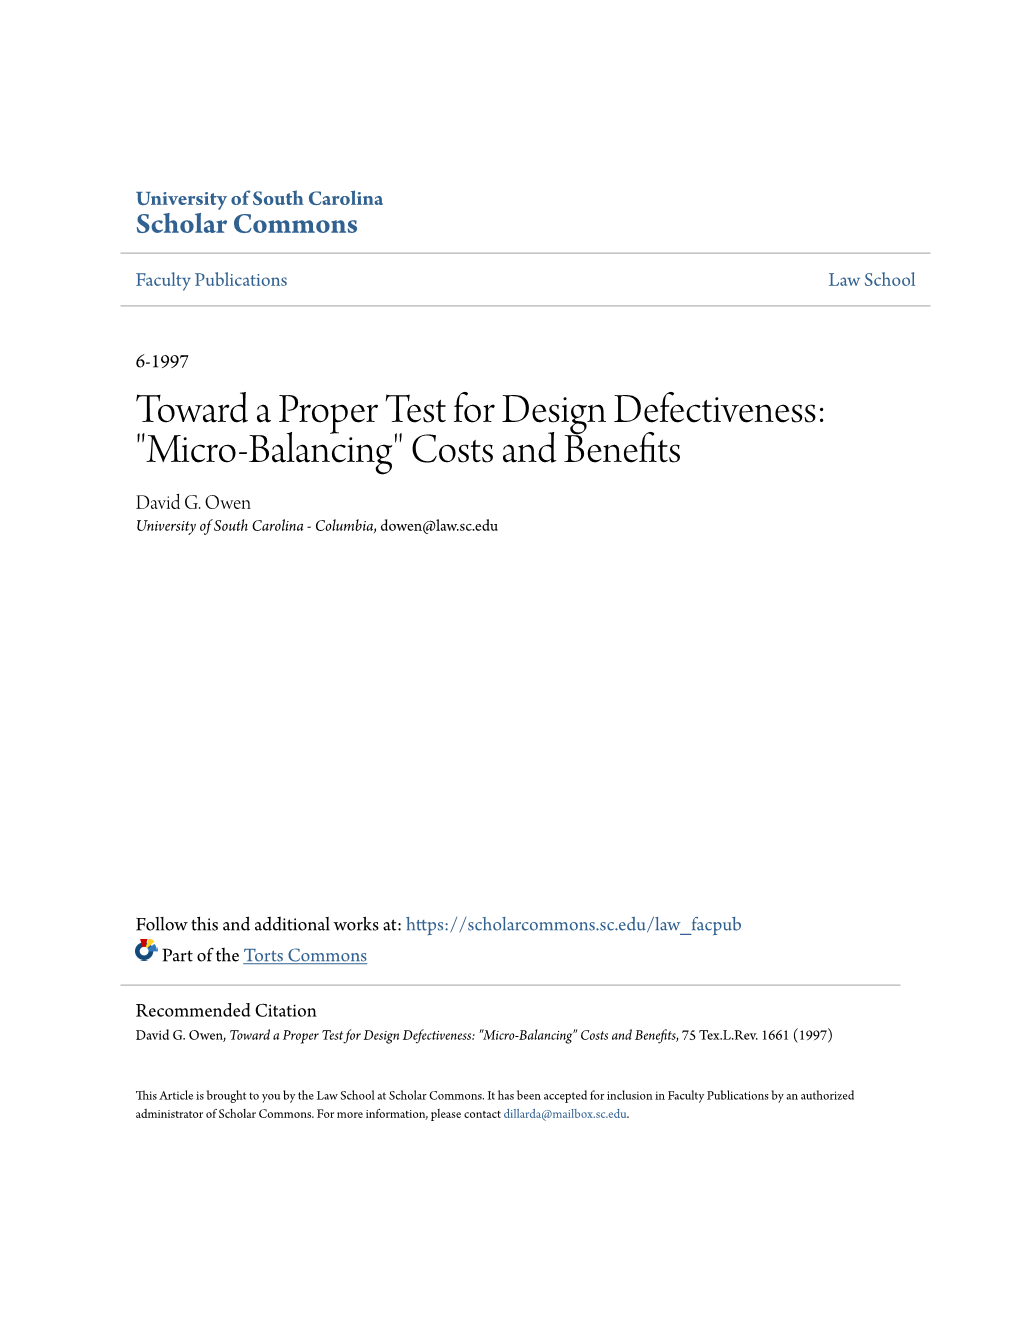 Toward a Proper Test for Design Defectiveness: "Micro-Balancing" Costs and Benefits David G